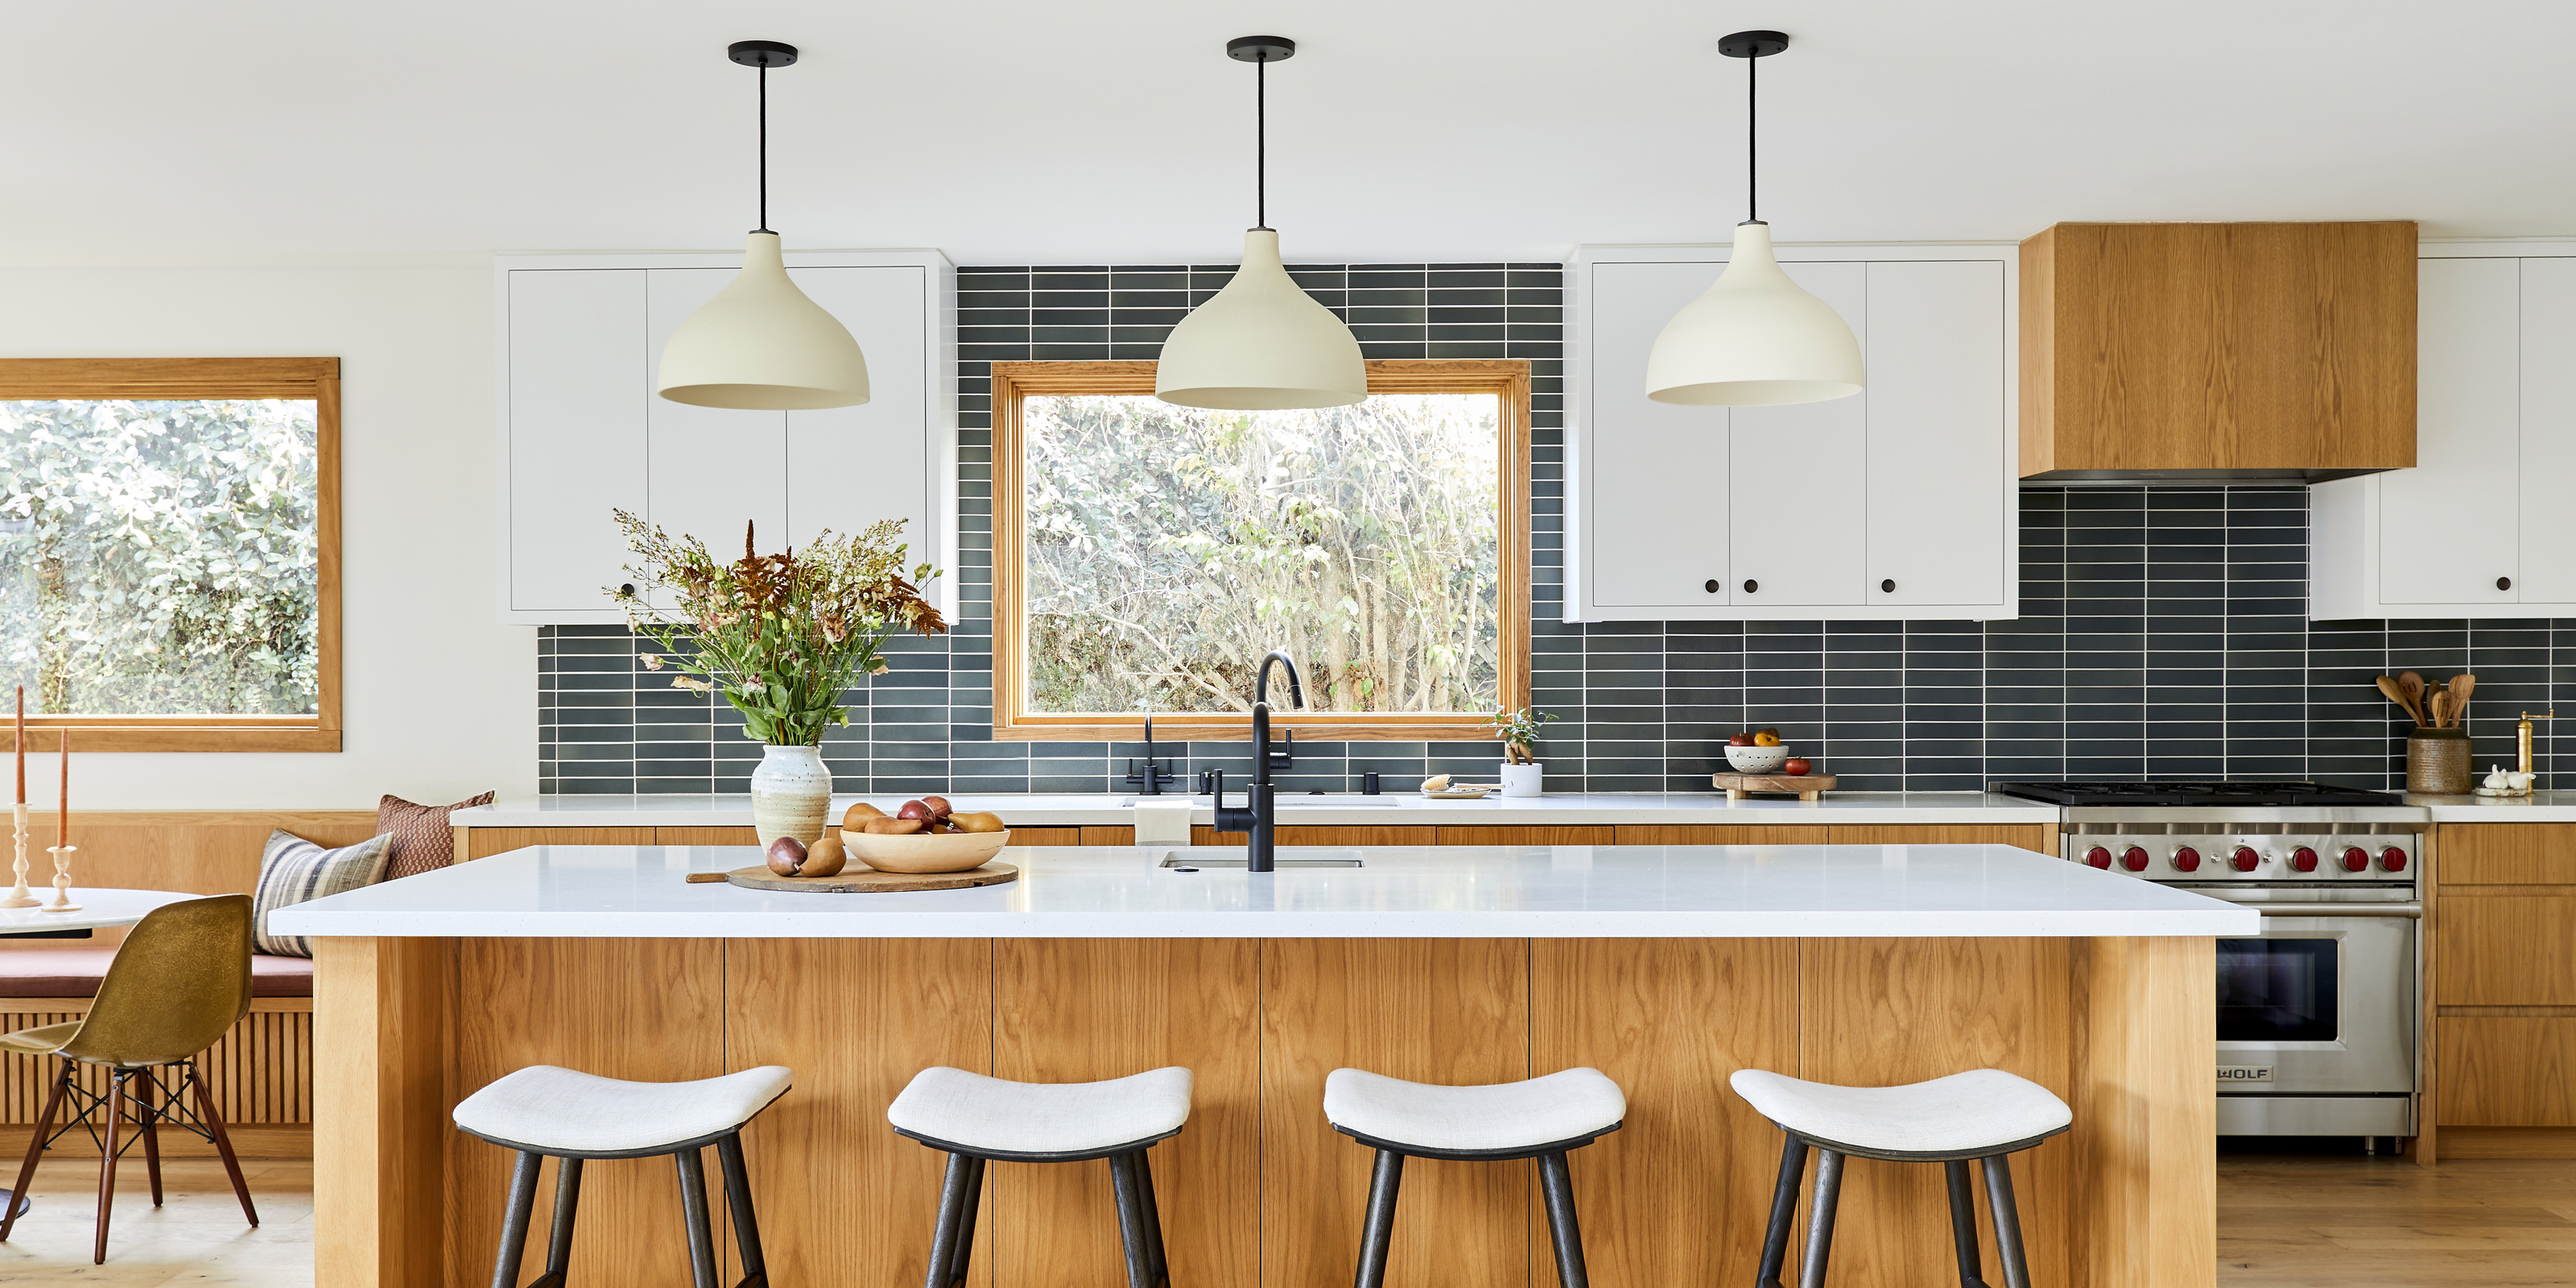 Kitchen lighting ideas: 45 lights designs to set the scene |